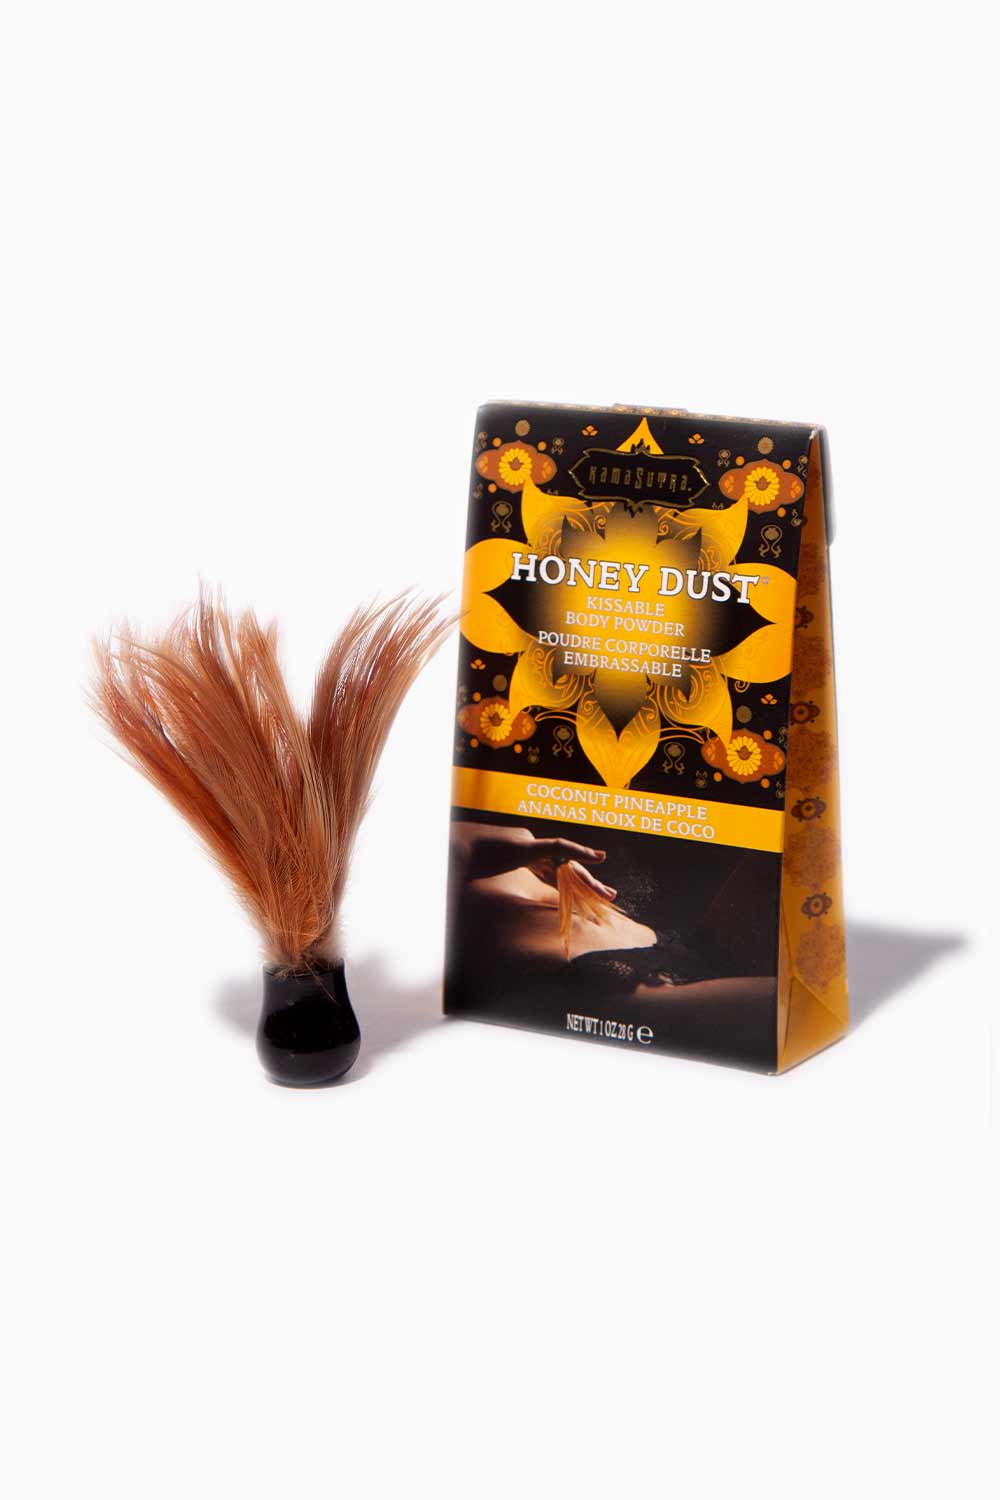 Honey Dust Polvo Corporal Besable